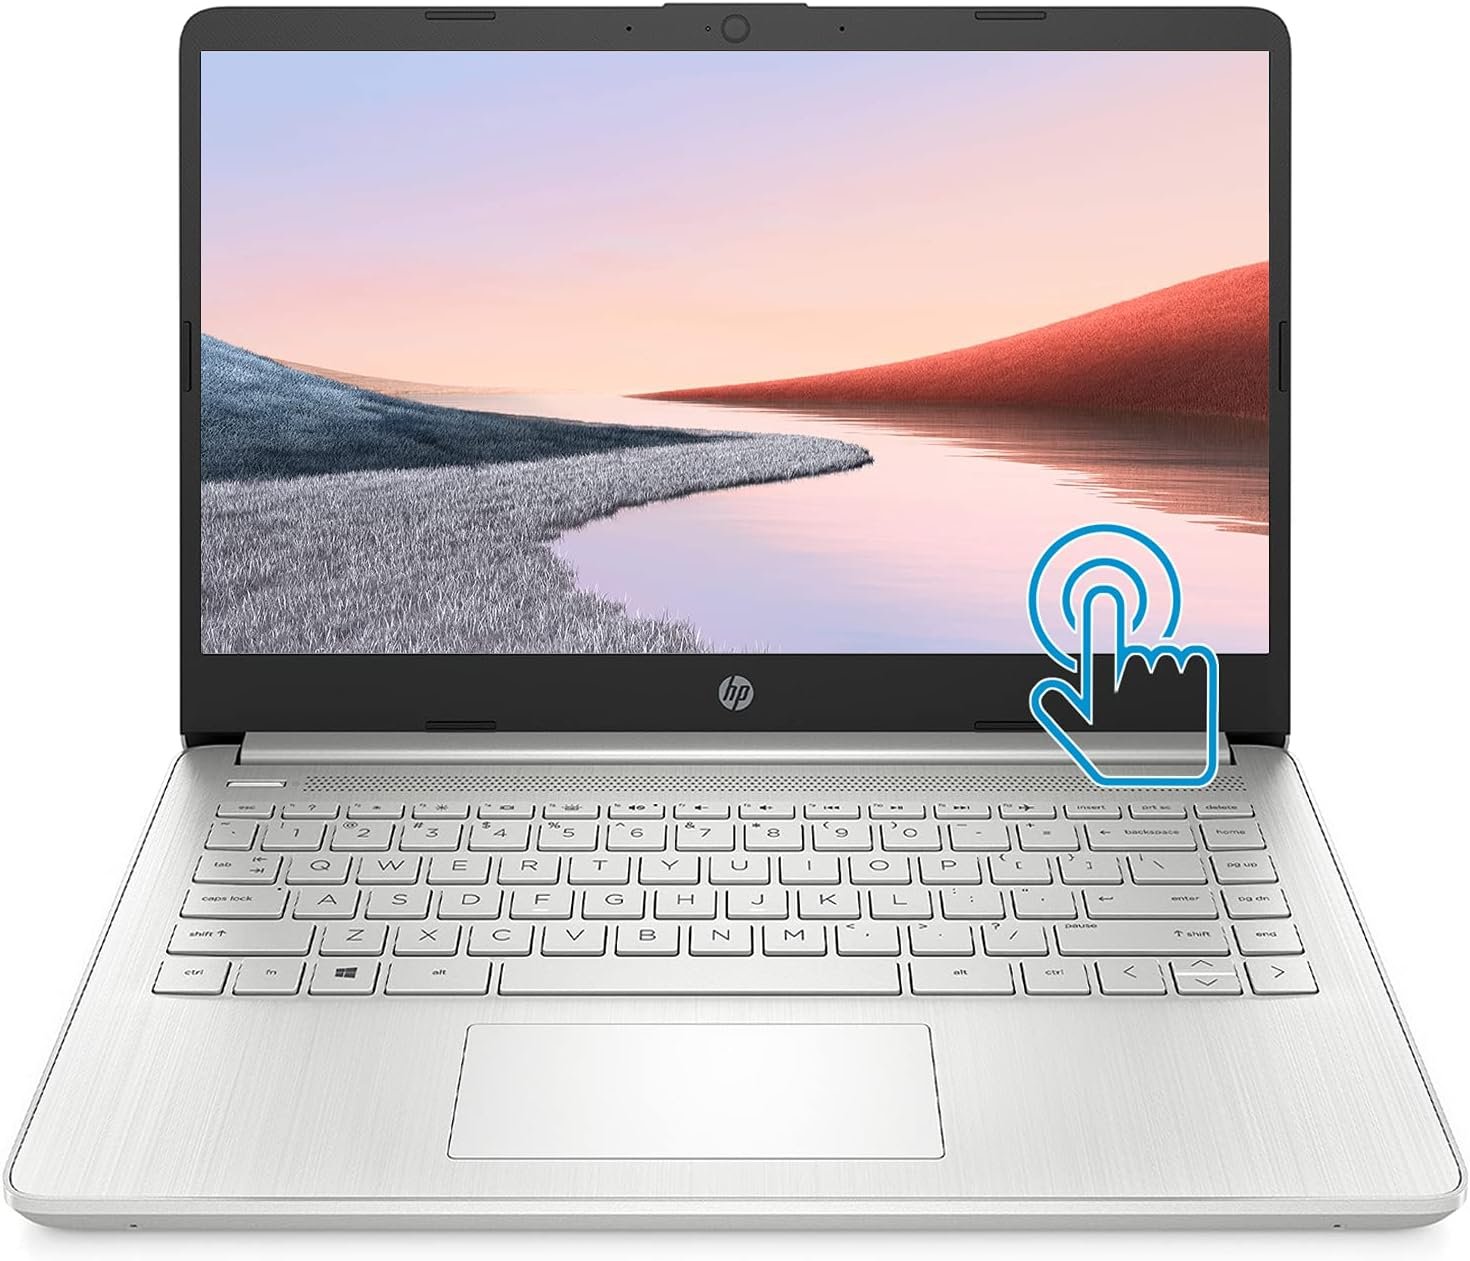 HP Premium Laptop (2021 Latest Model)